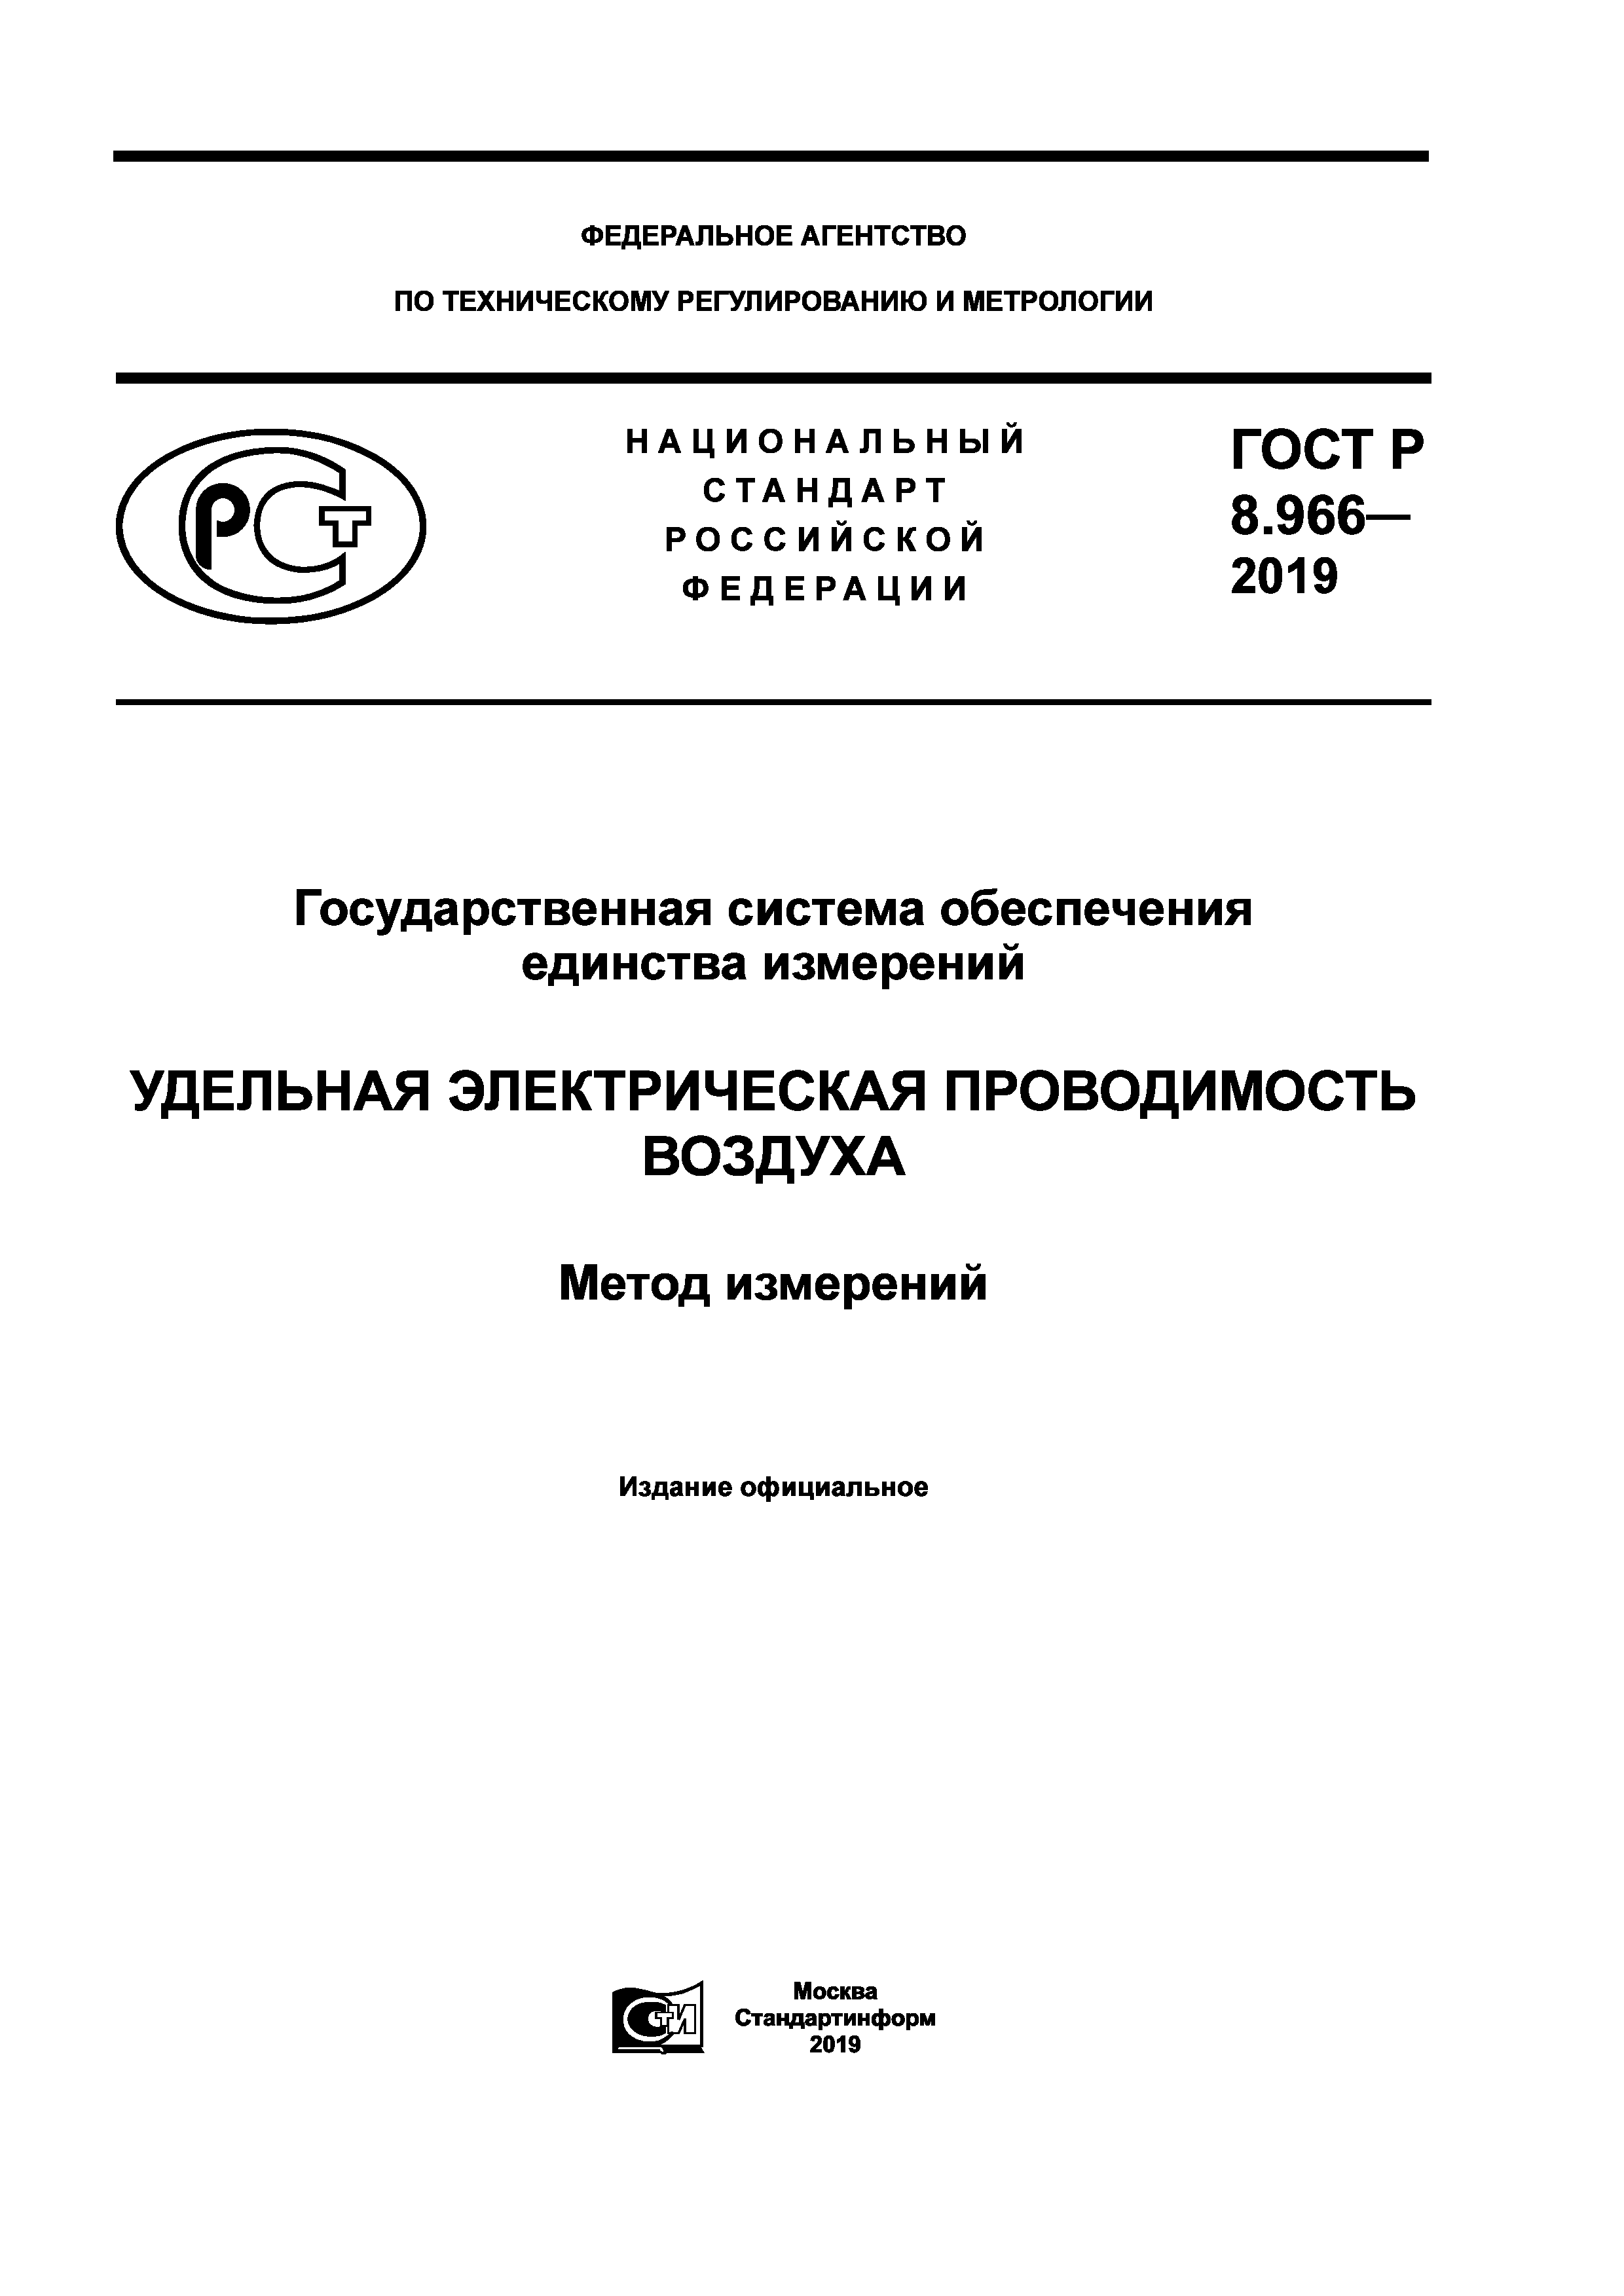 ГОСТ Р 8.966-2019